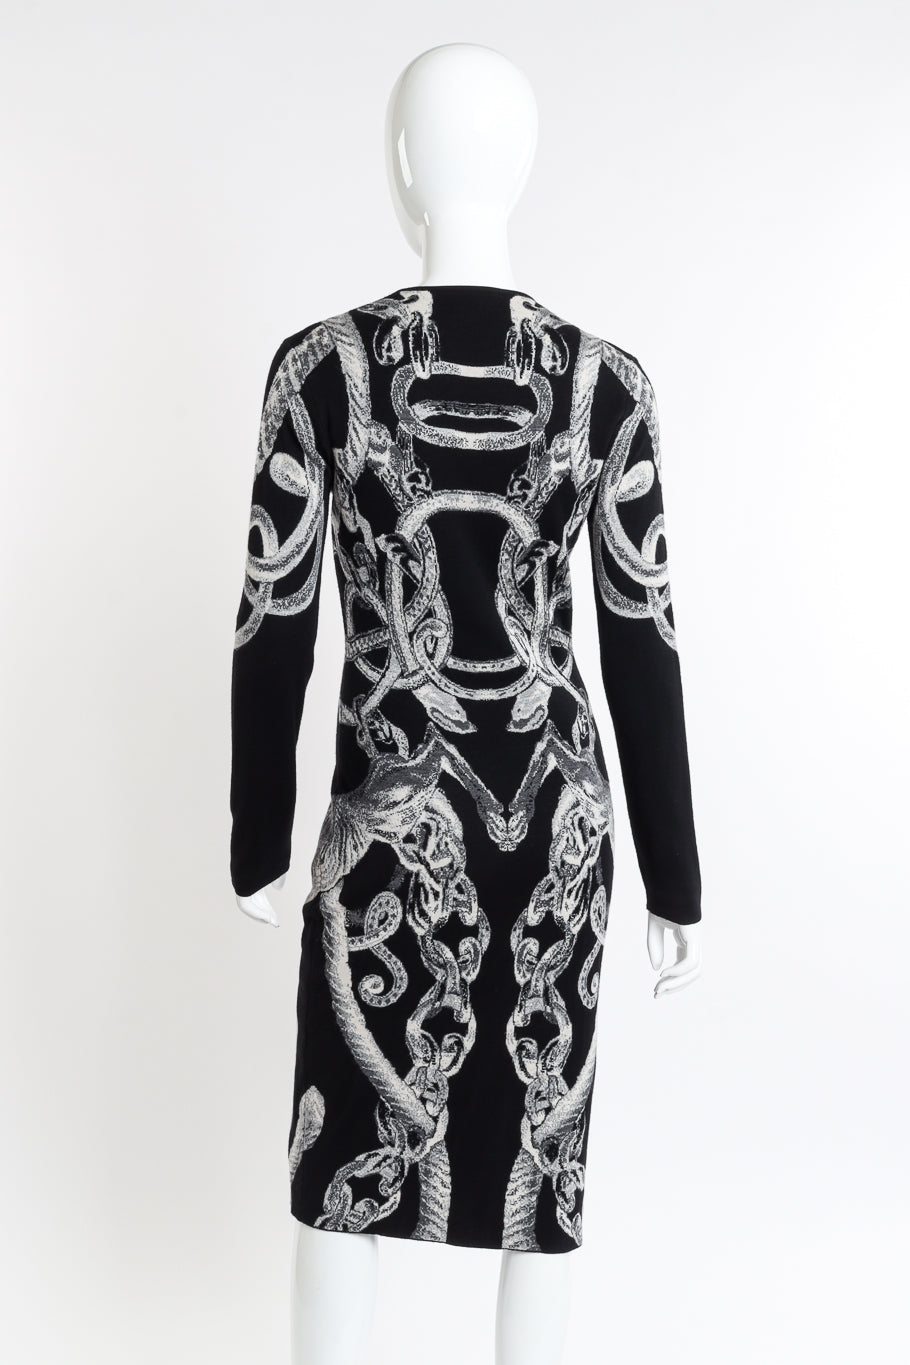 Alexander McQueen 2010 A/W Graphic Knit Dress back on mannequin closeup @recessla